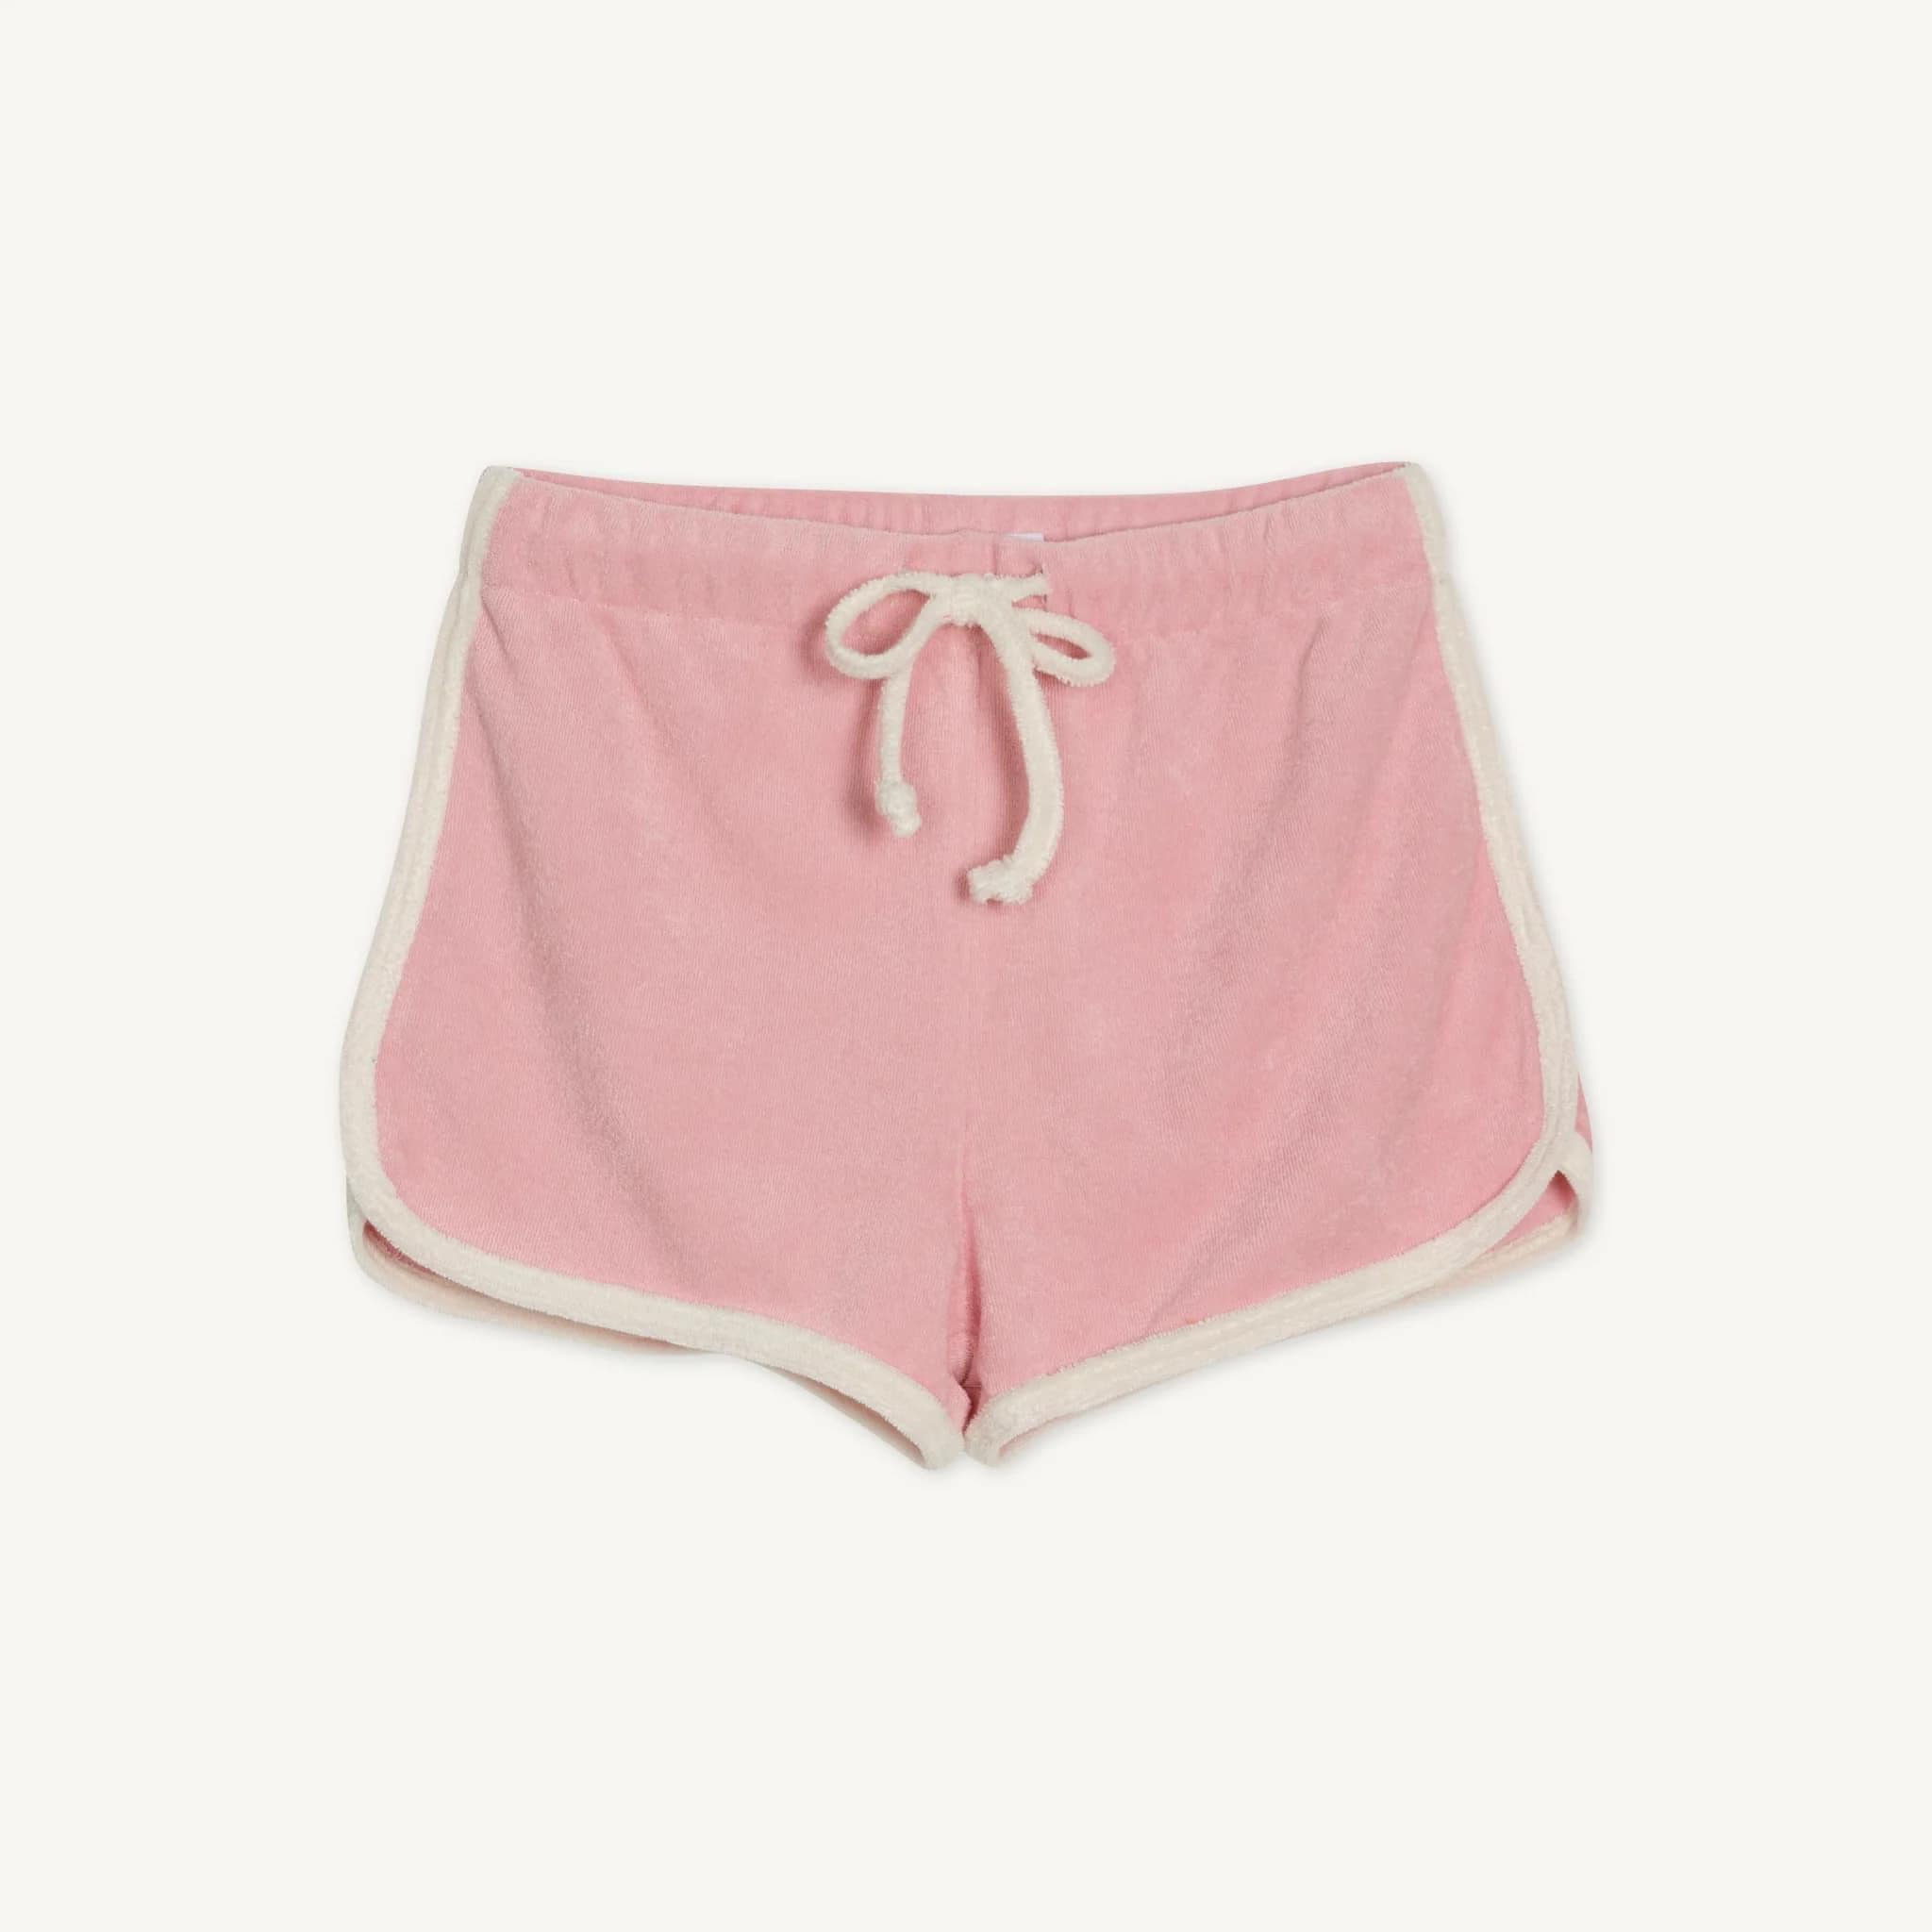 play etc pink shorts